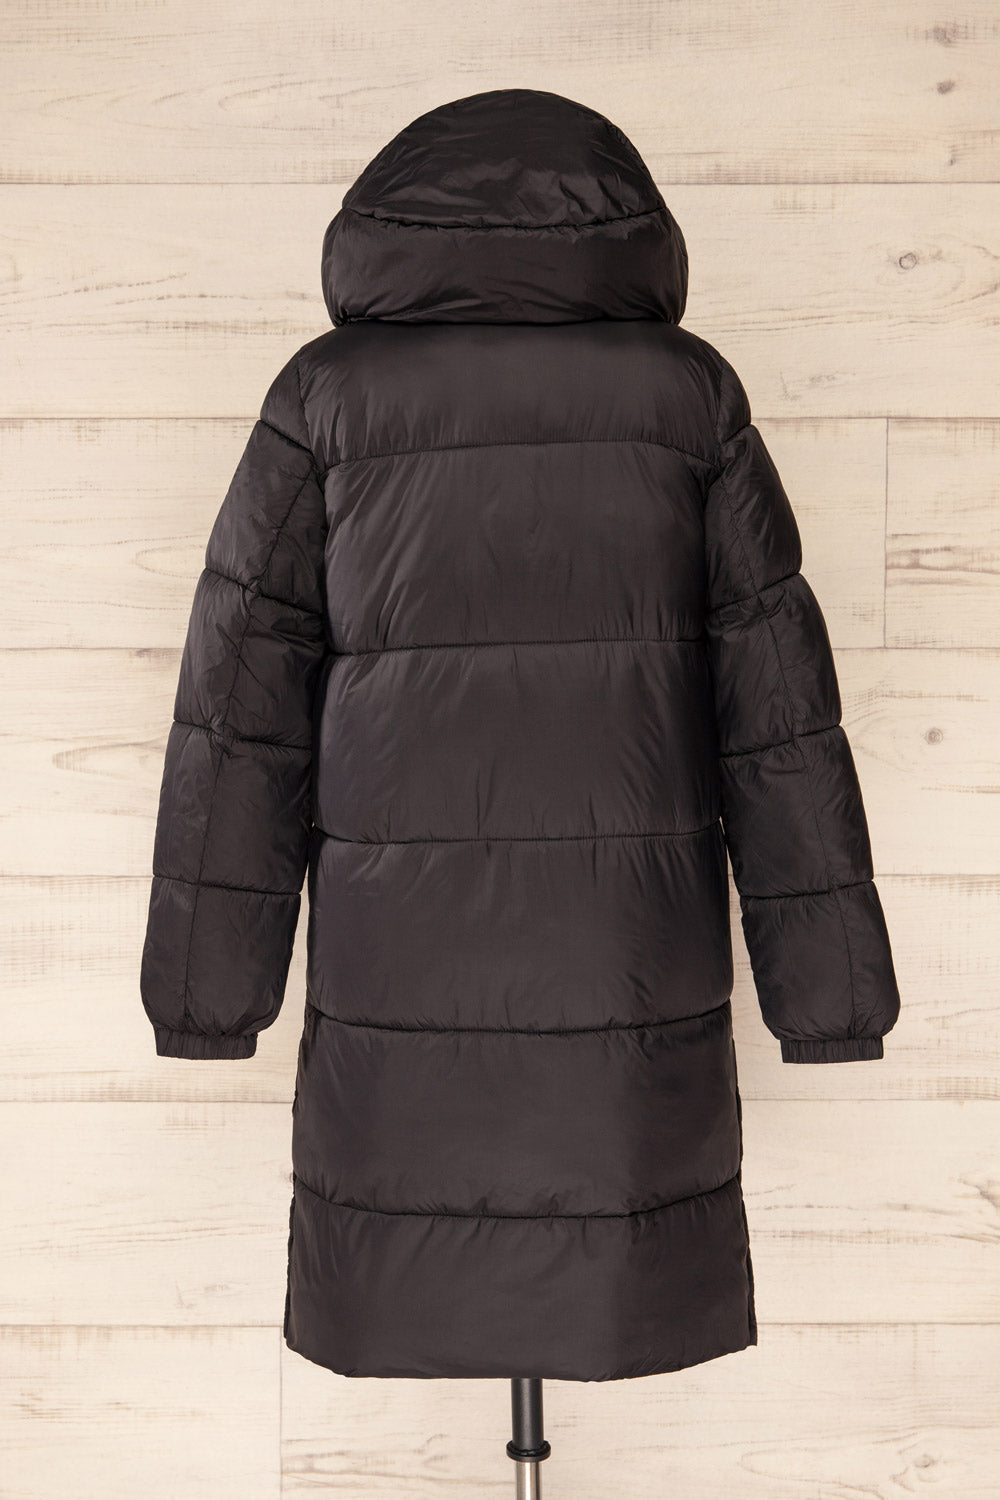 Brisson Black Hooded Puffer Coat w/ Front Pockets | La petite garçonne back view hood